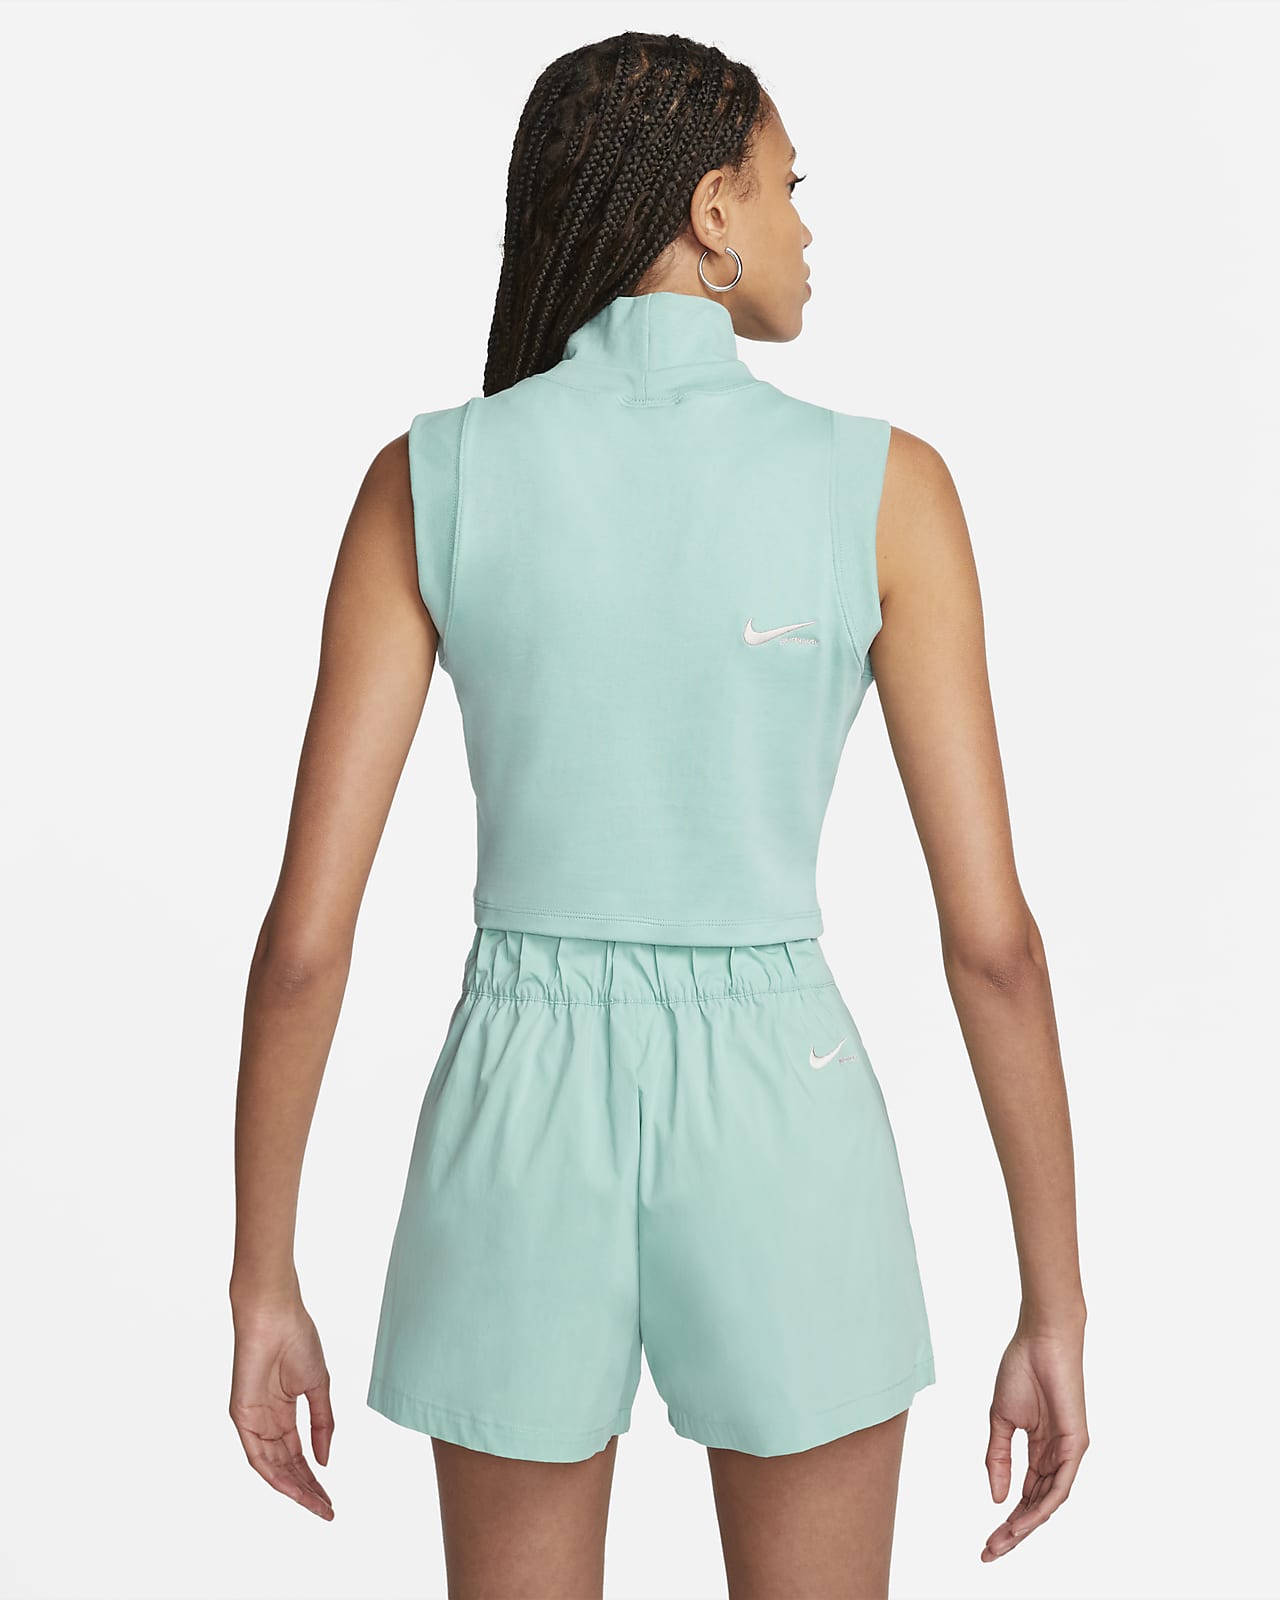 Womens Turtle Neck Crop Tops Short Shirt Sleeveless Fitness Tank